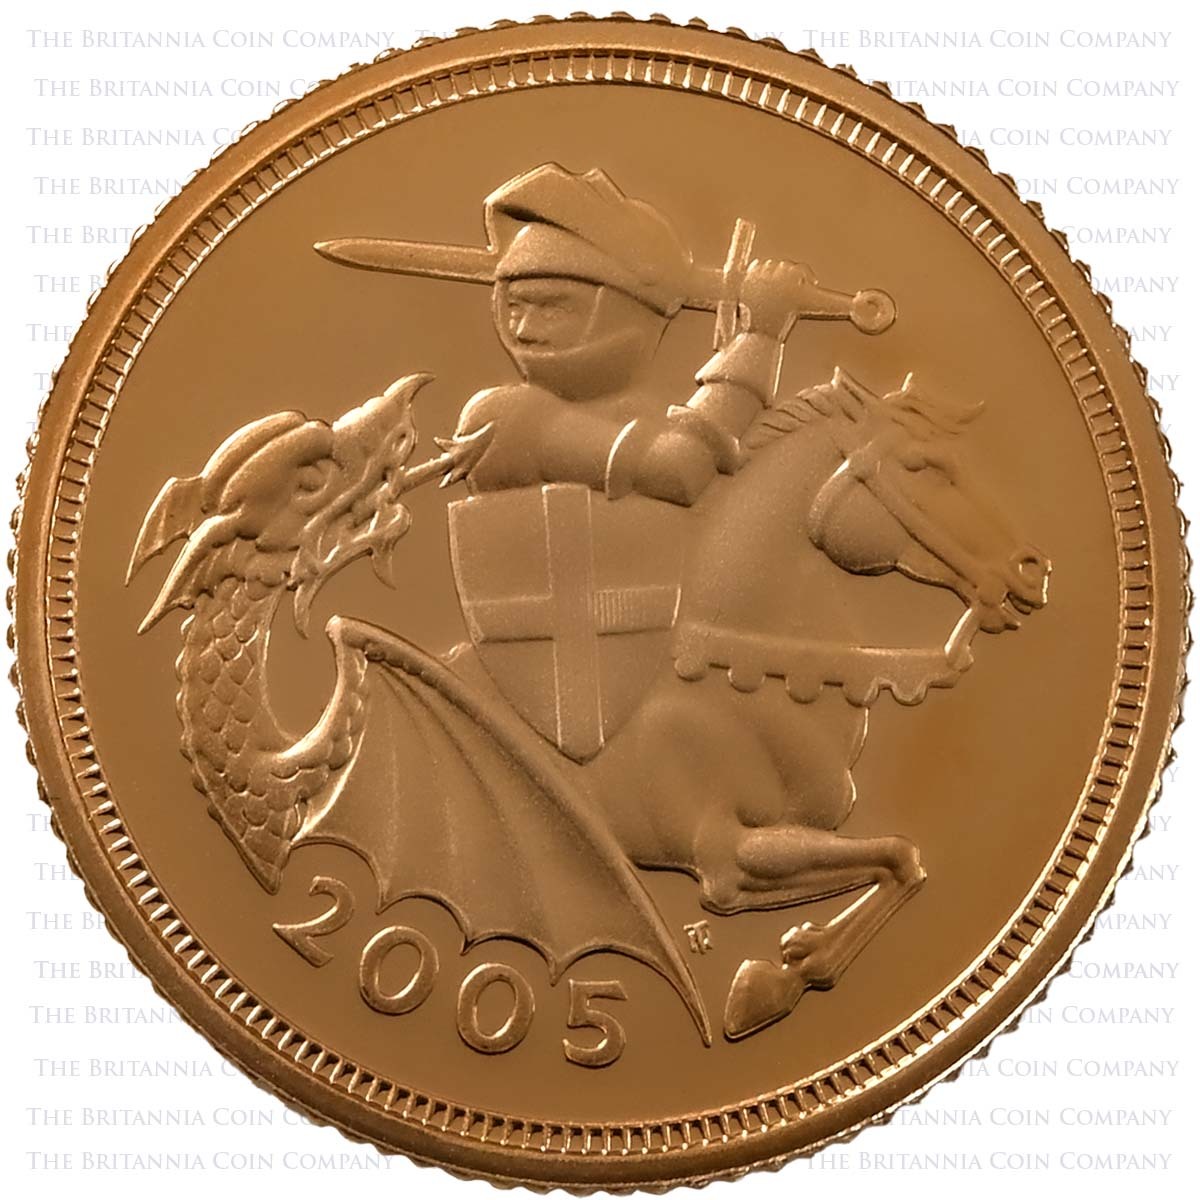 2005 Elizabeth II Gold Proof Half Sovereign Timothy Noad Reverse Reverse